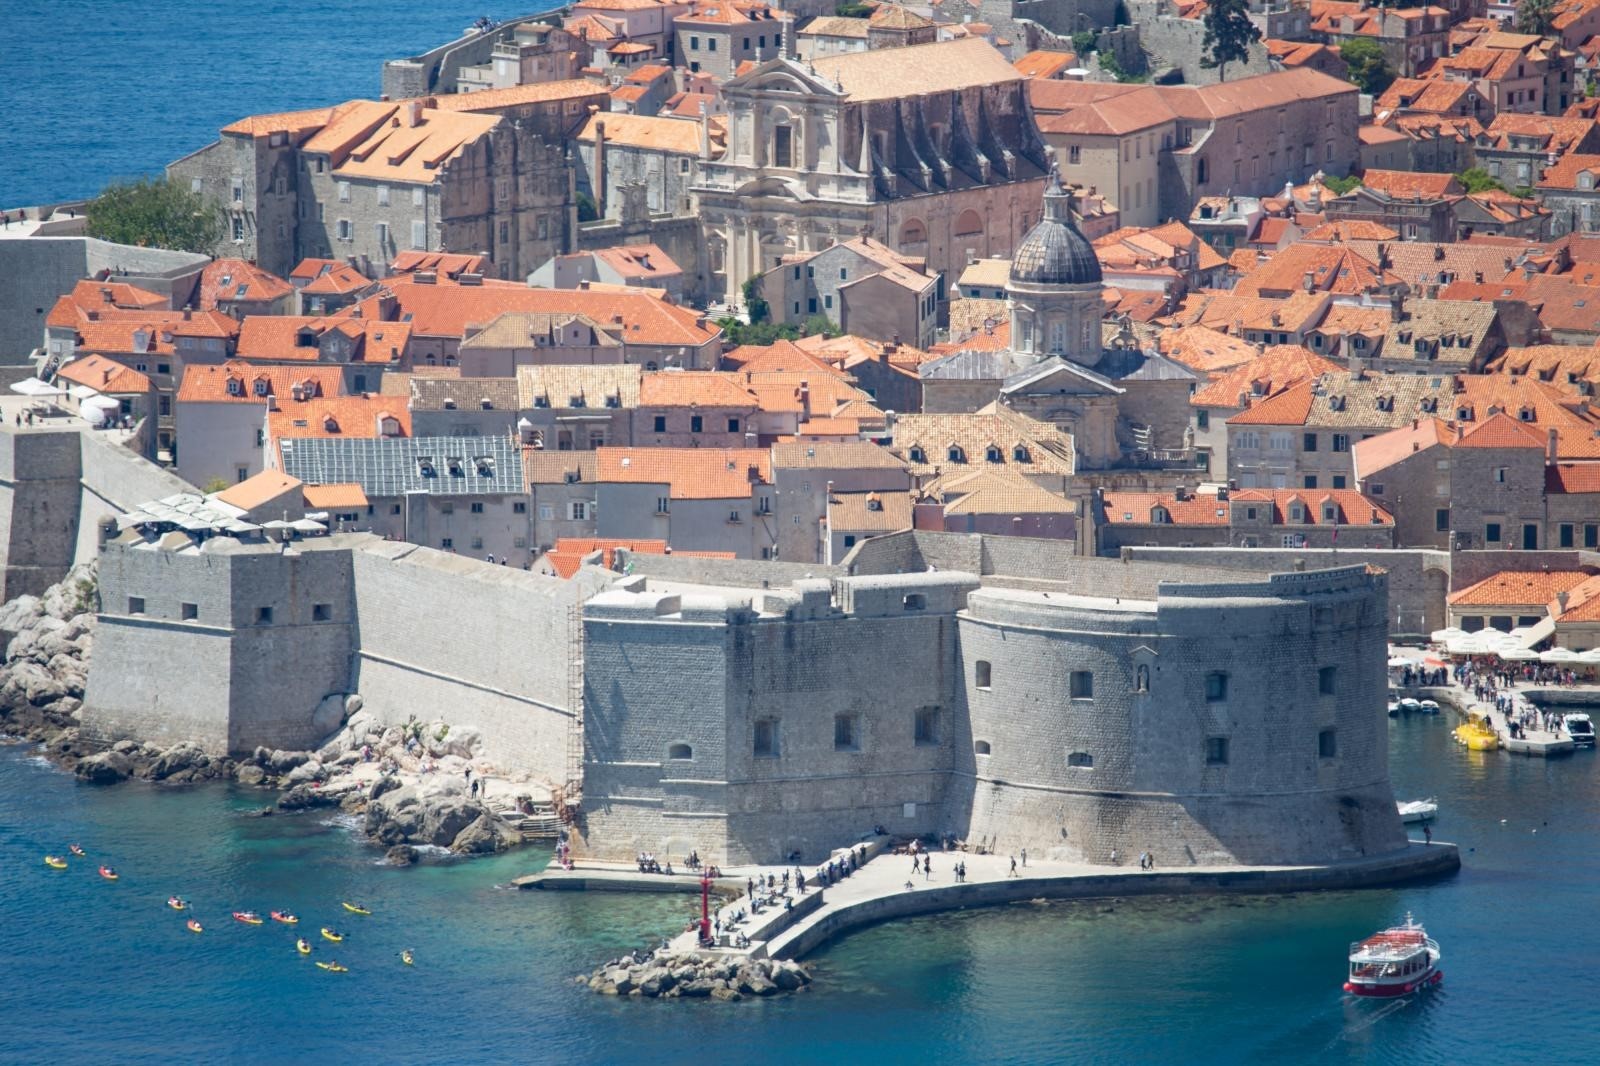 08.05.2019., Padine Srdja, Dubrovnik - Pogled na Dubrovnik sa Srdja.
Photo: Grgo Jelavic/PIXSELL